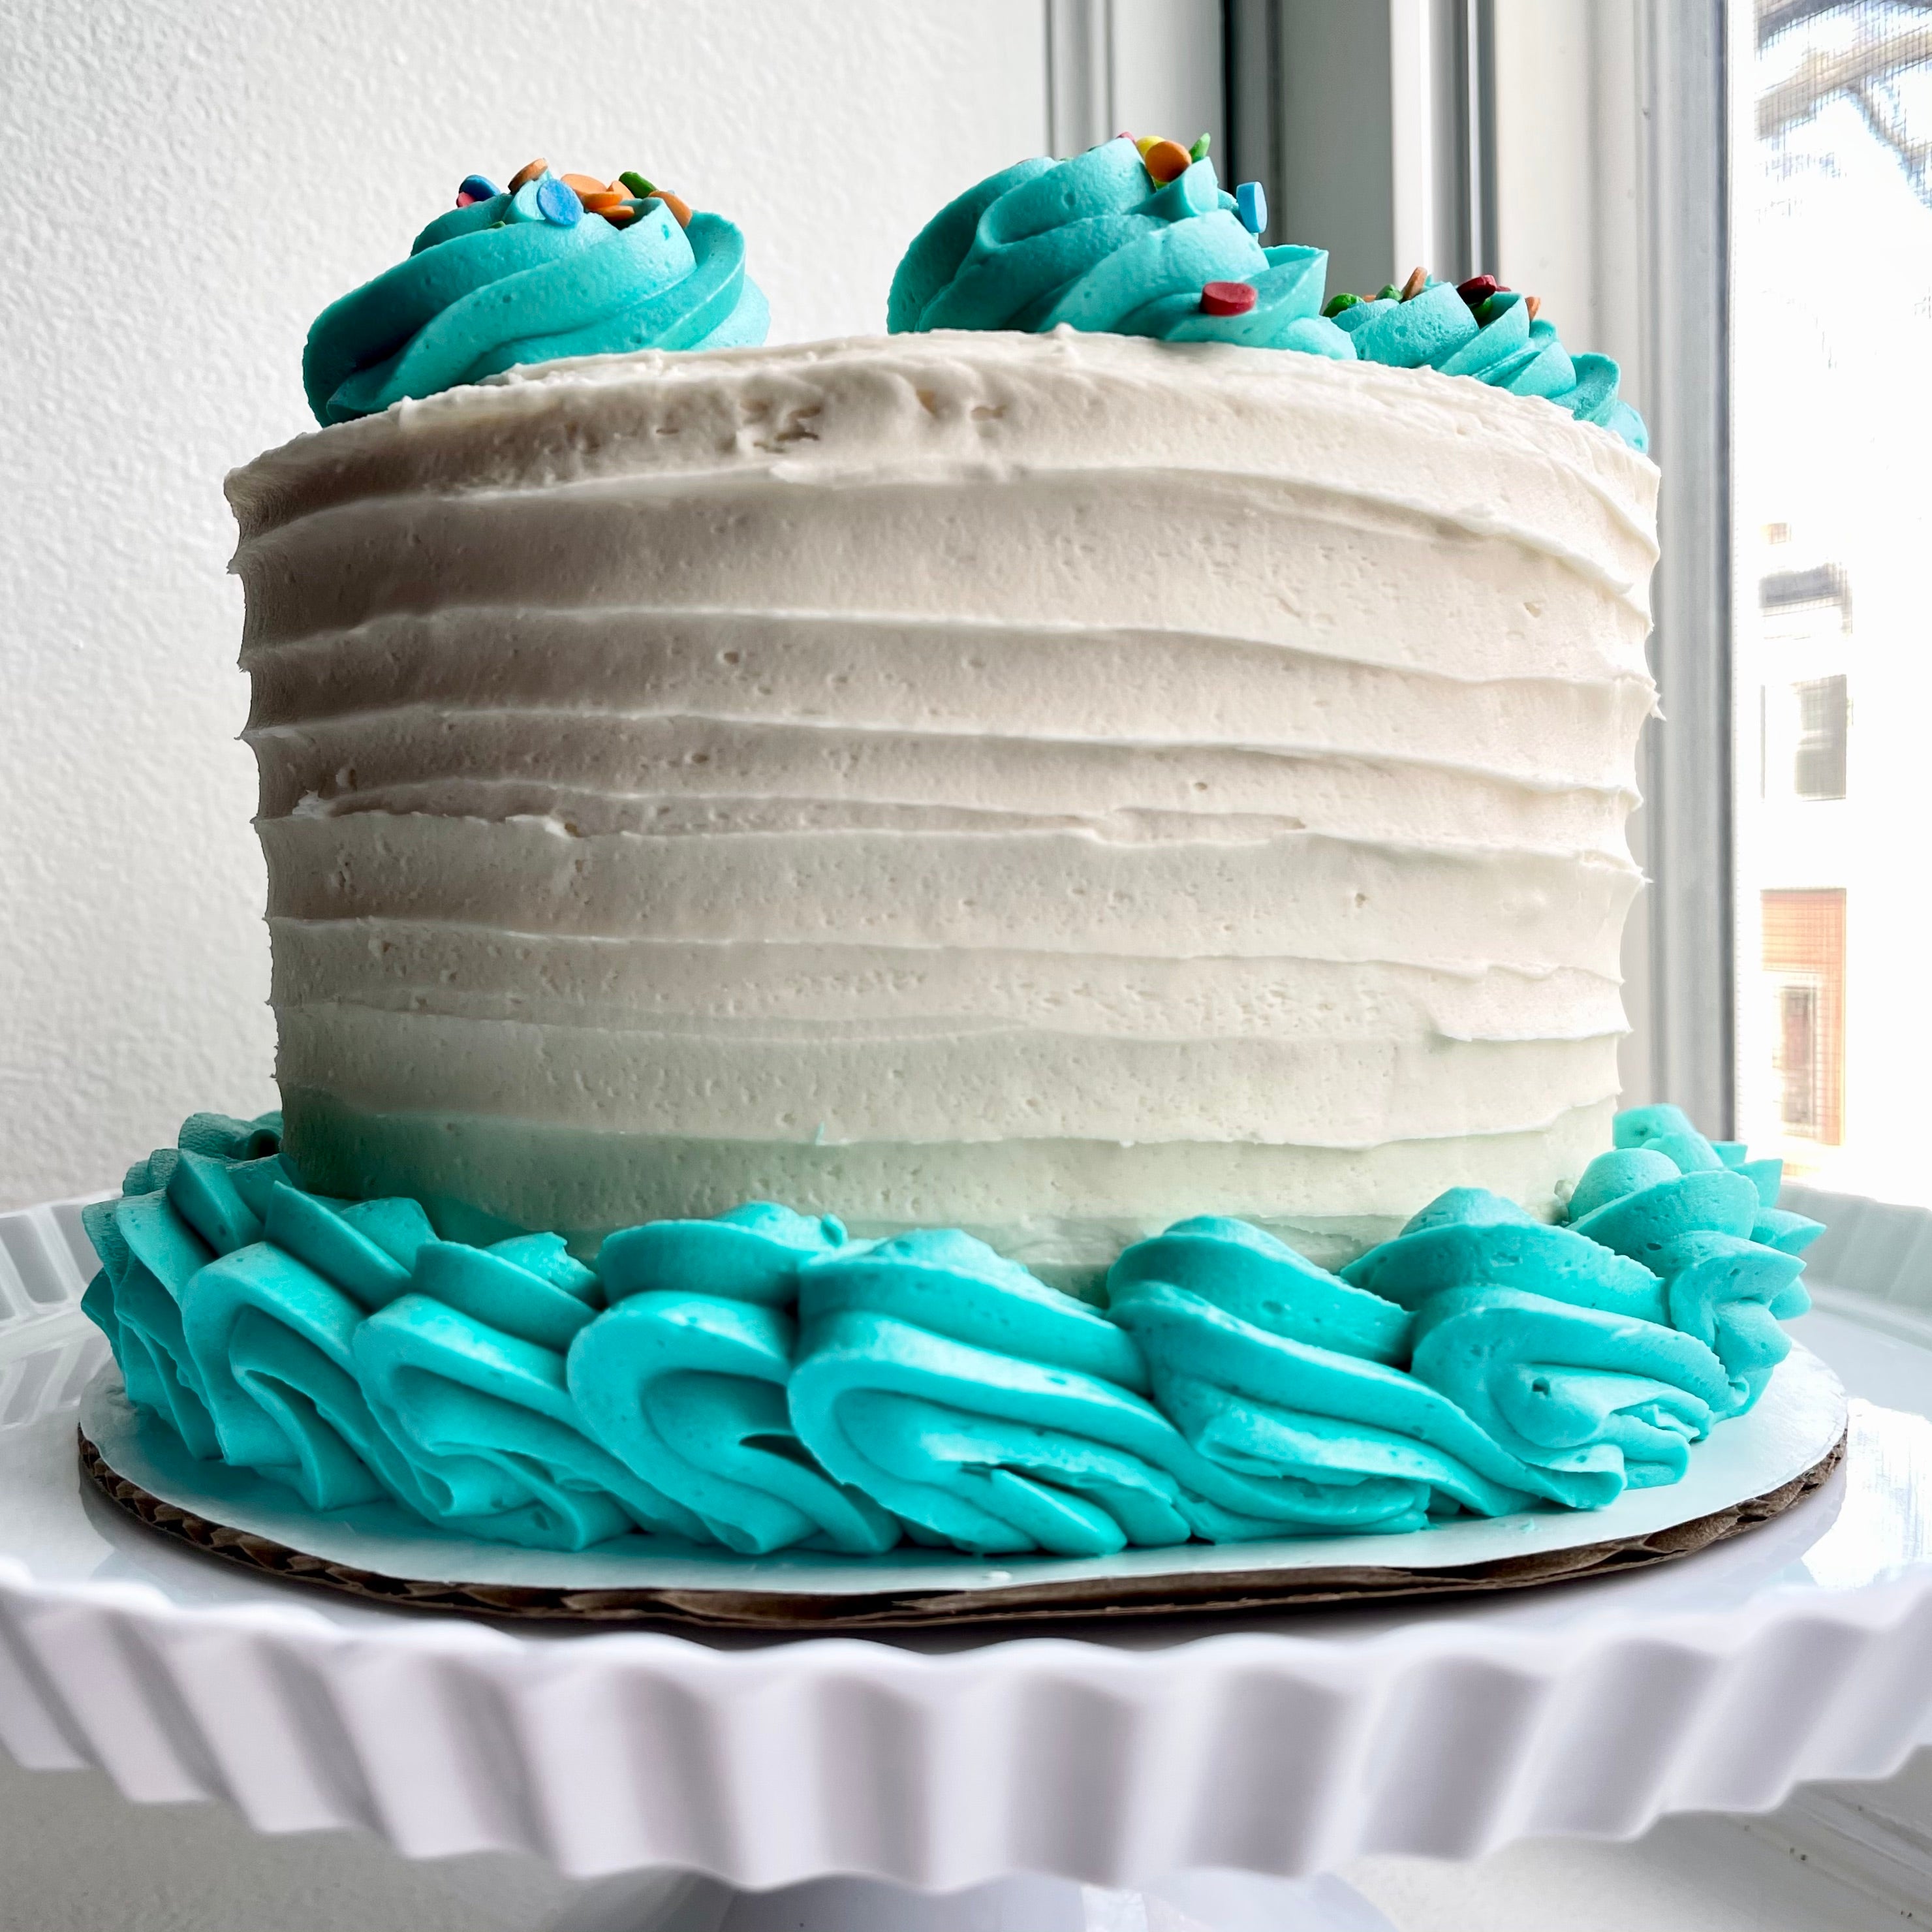 Cake - Birthday Cake | Sweet Tooth Shop